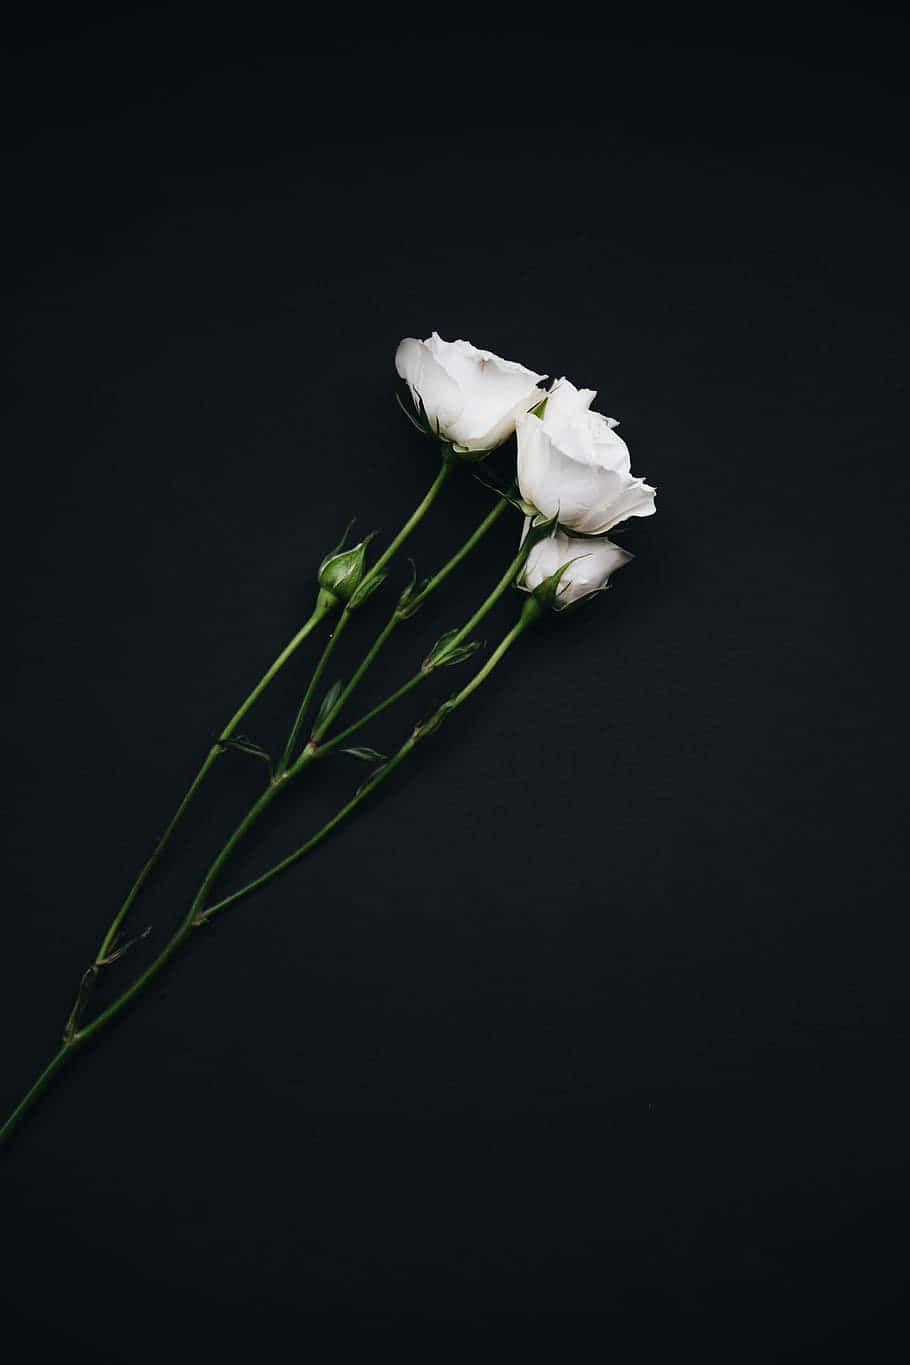 A pristine white rose with attractive pedals